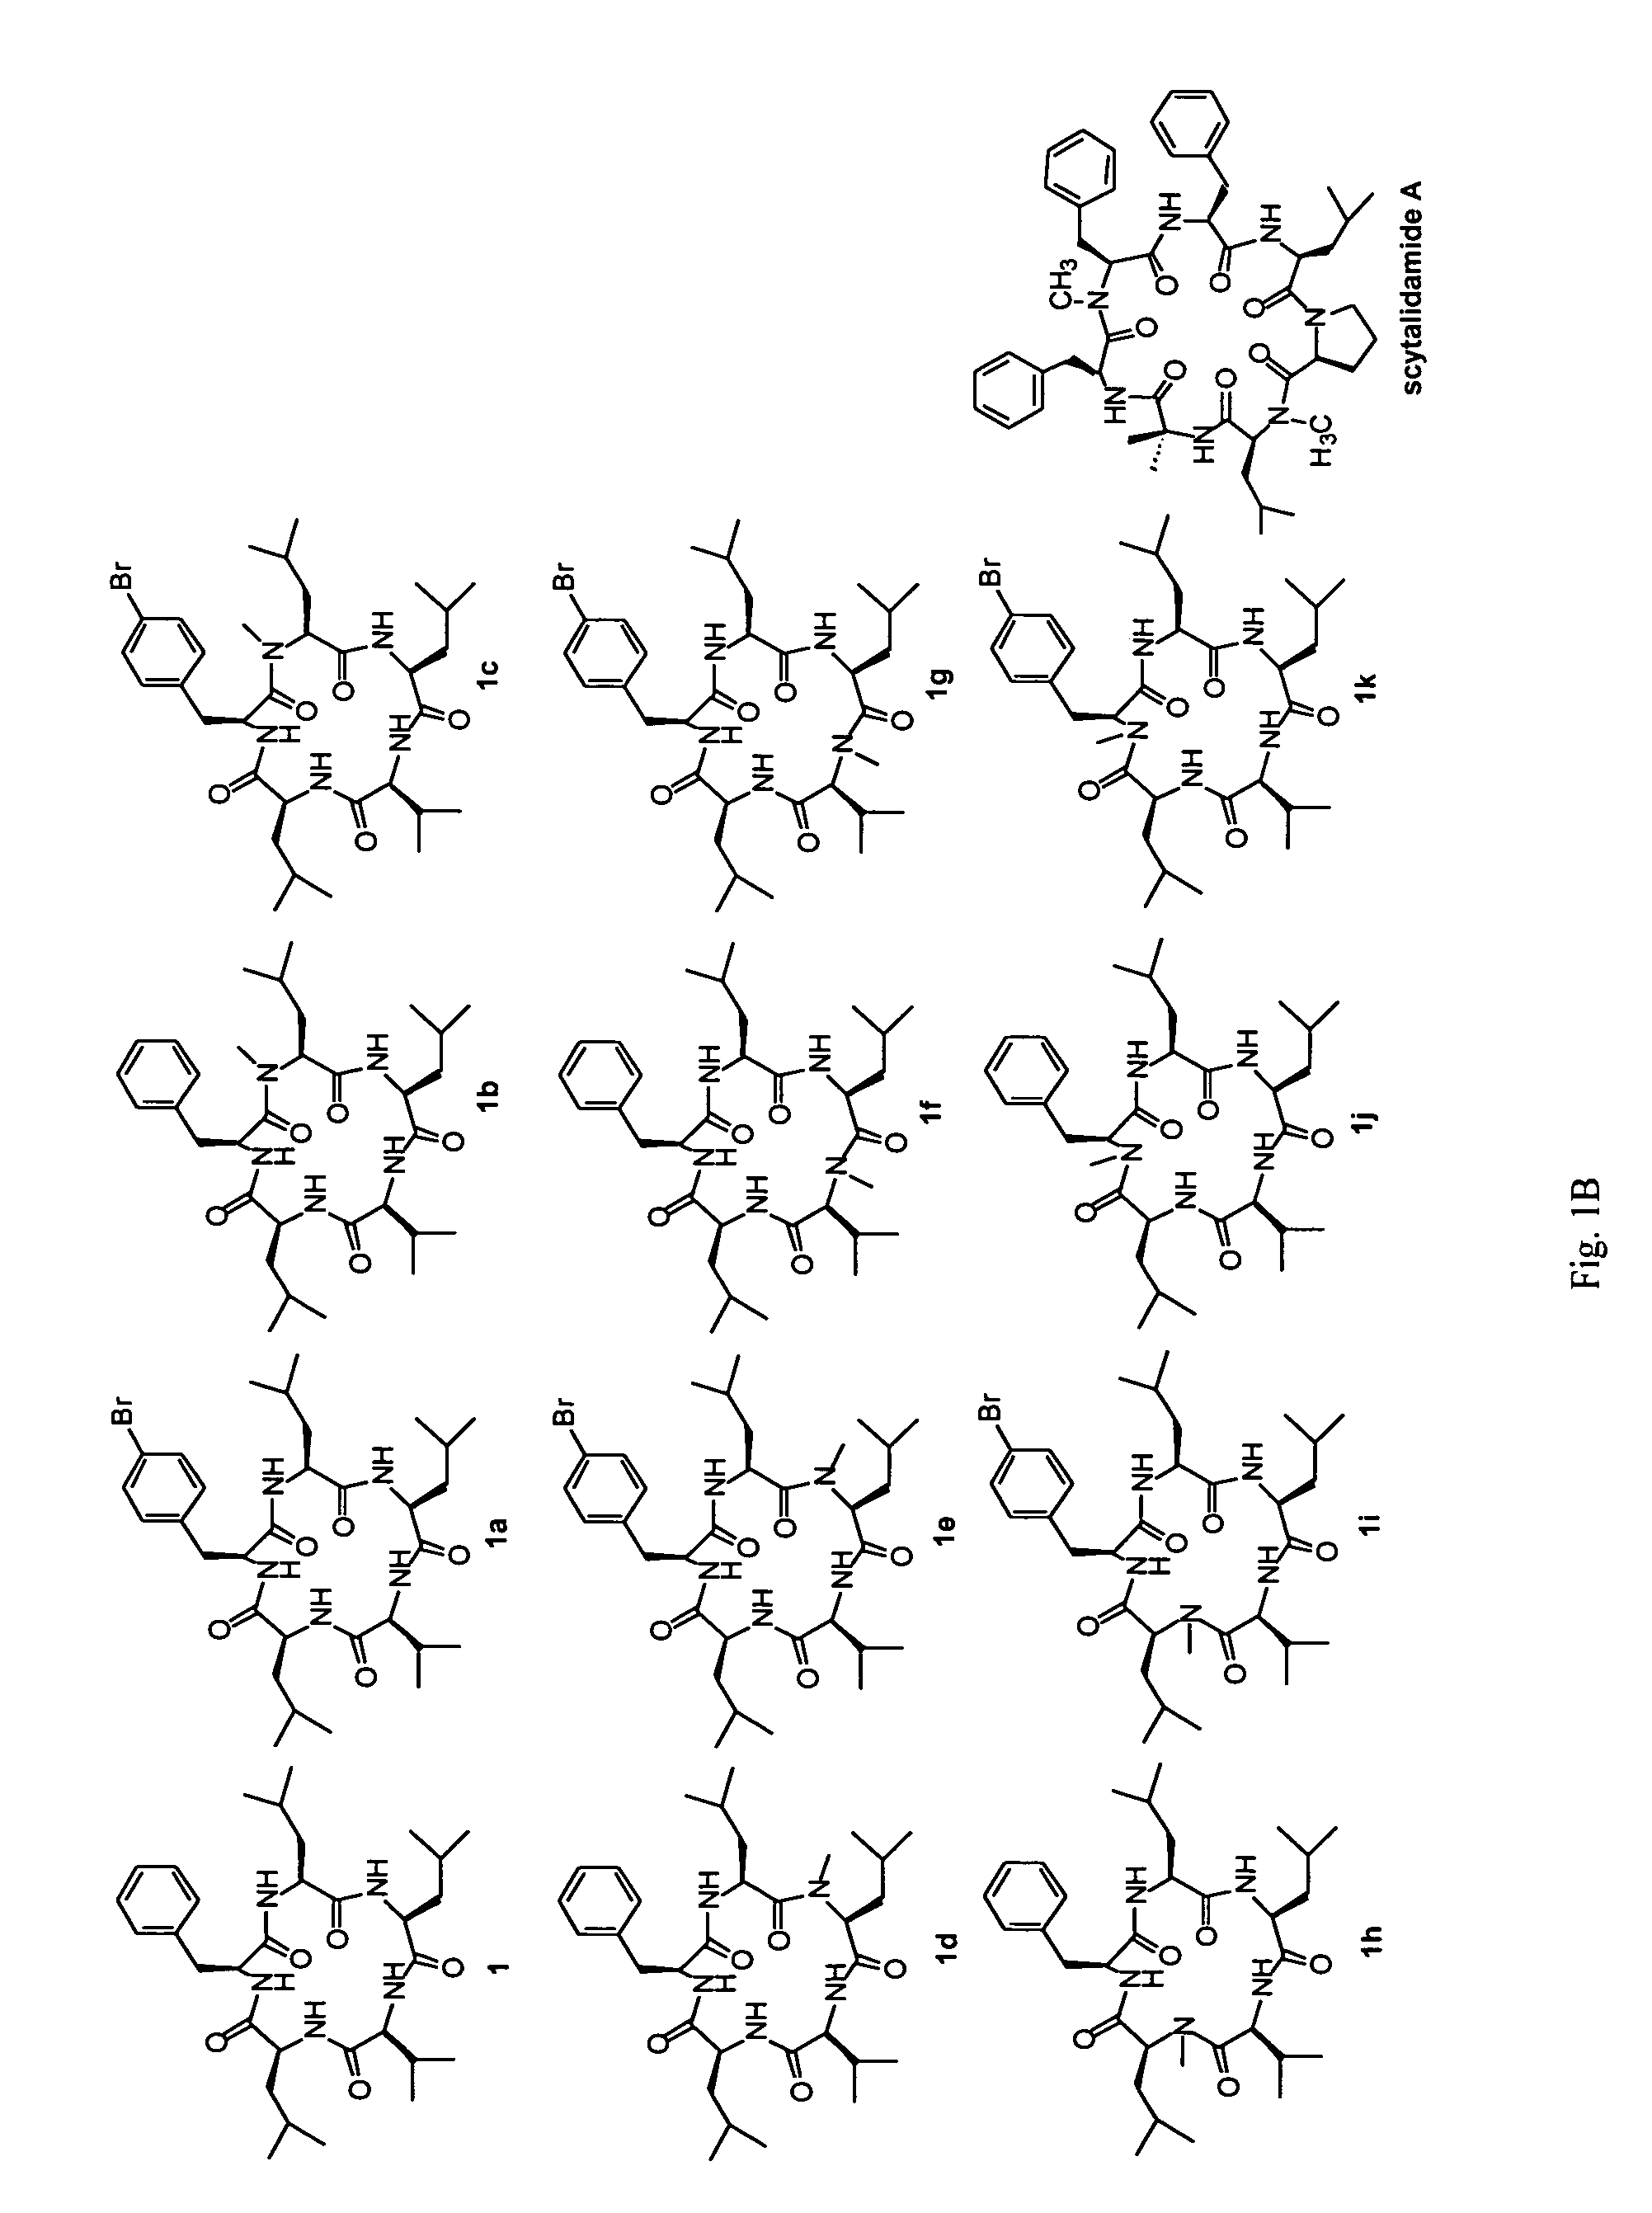 Cyclic peptide antitumor agents